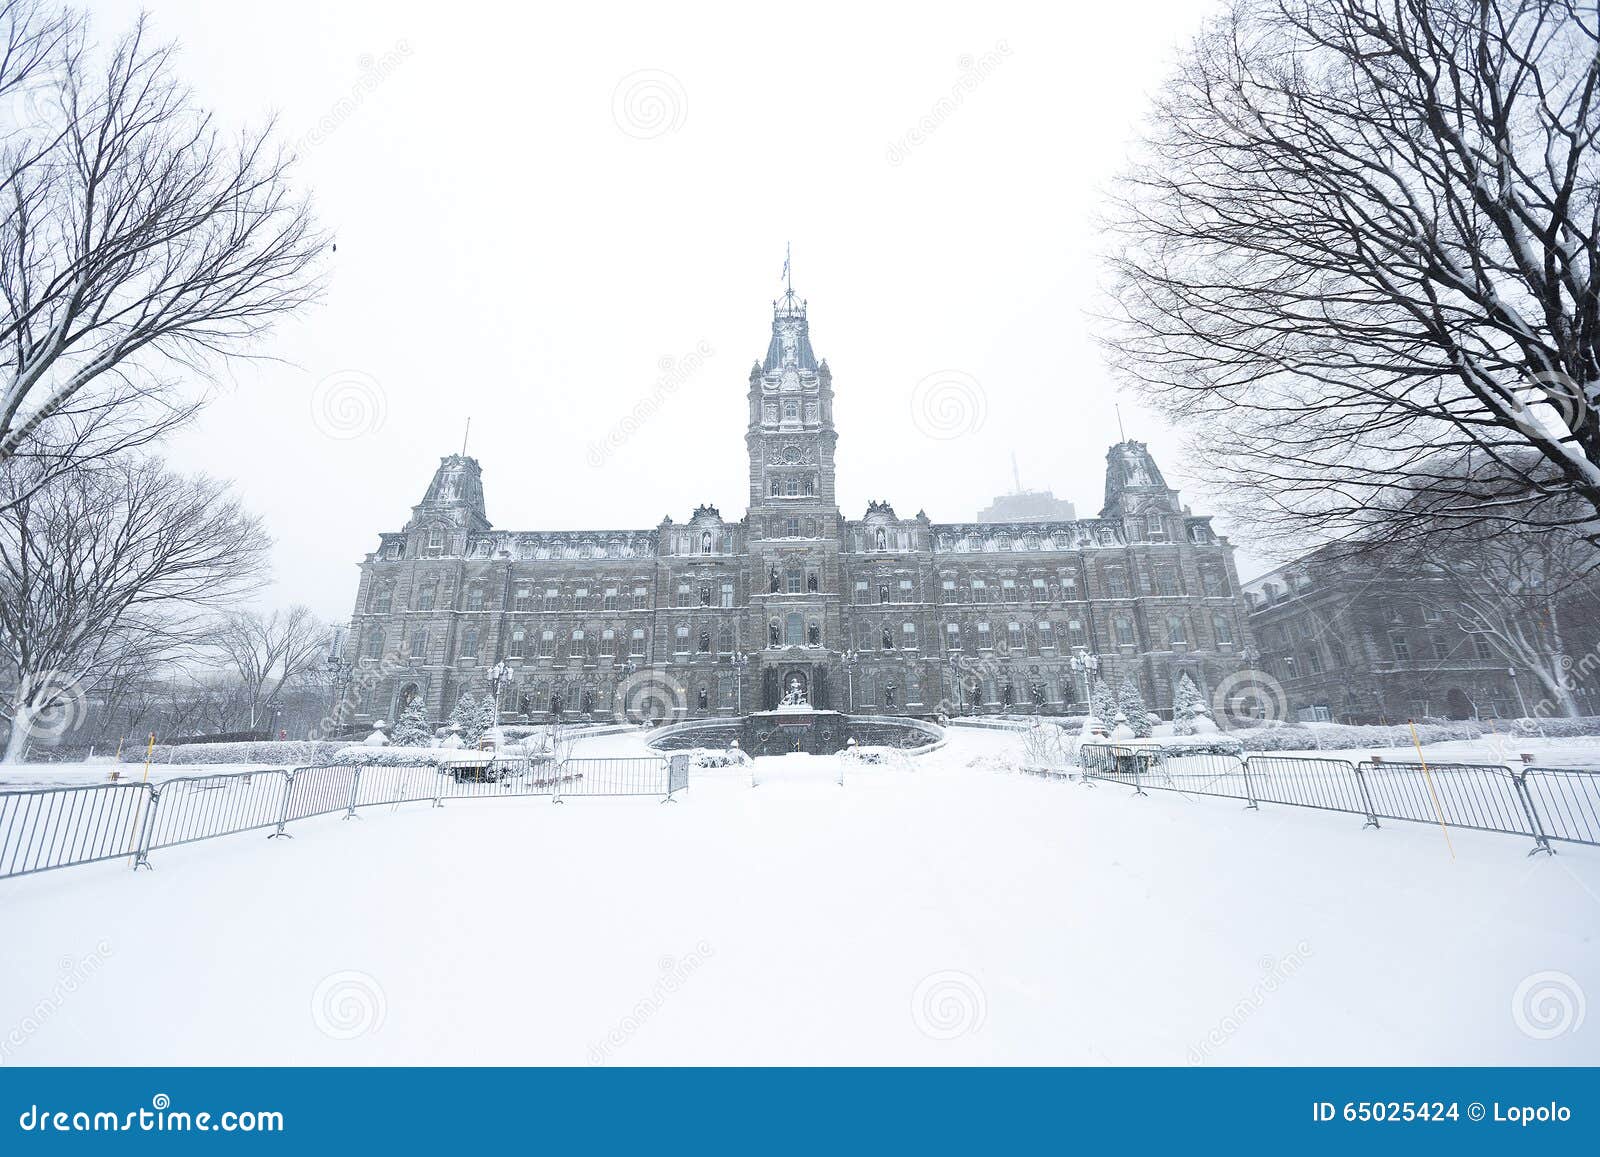 quebec parliament hÃÂ´tel du parlement in winter